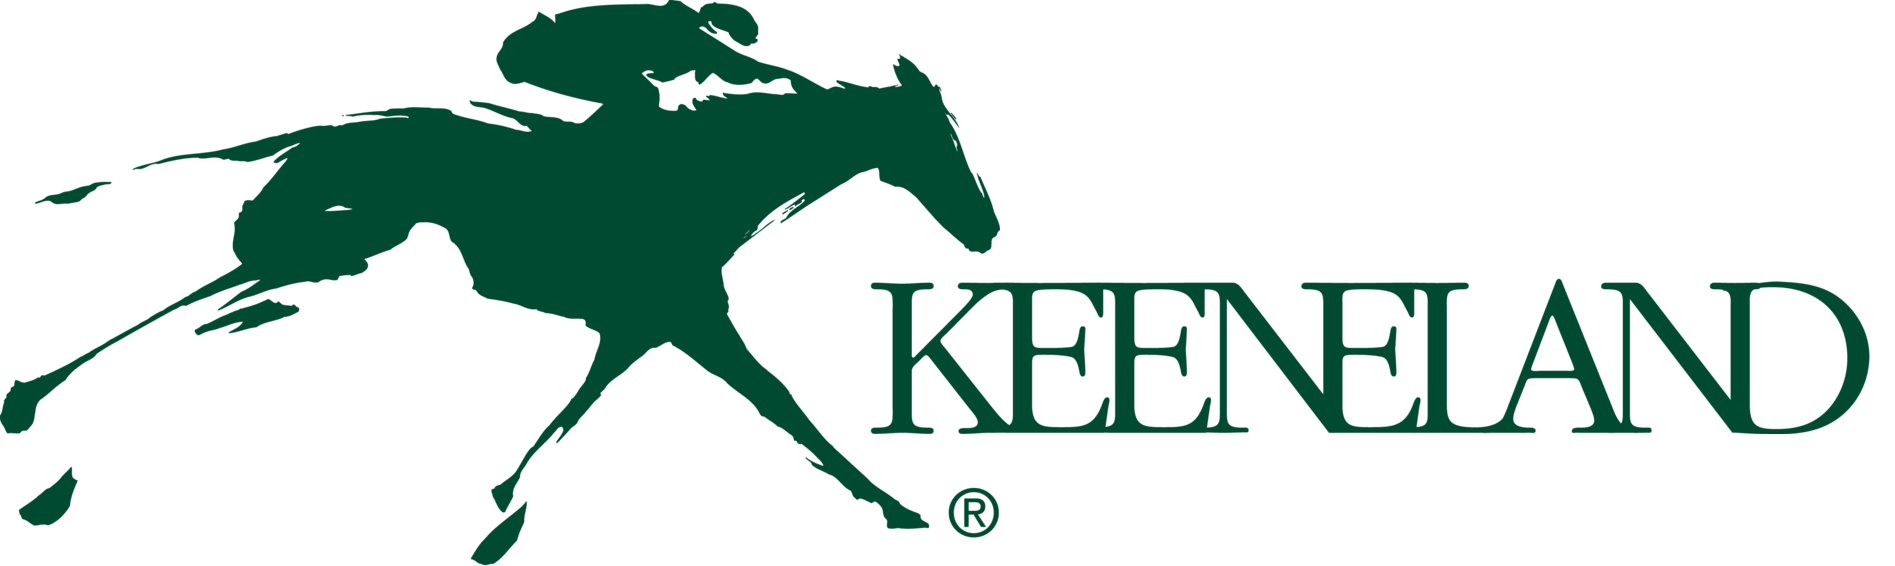 Keeneland-Logo-CLEAR